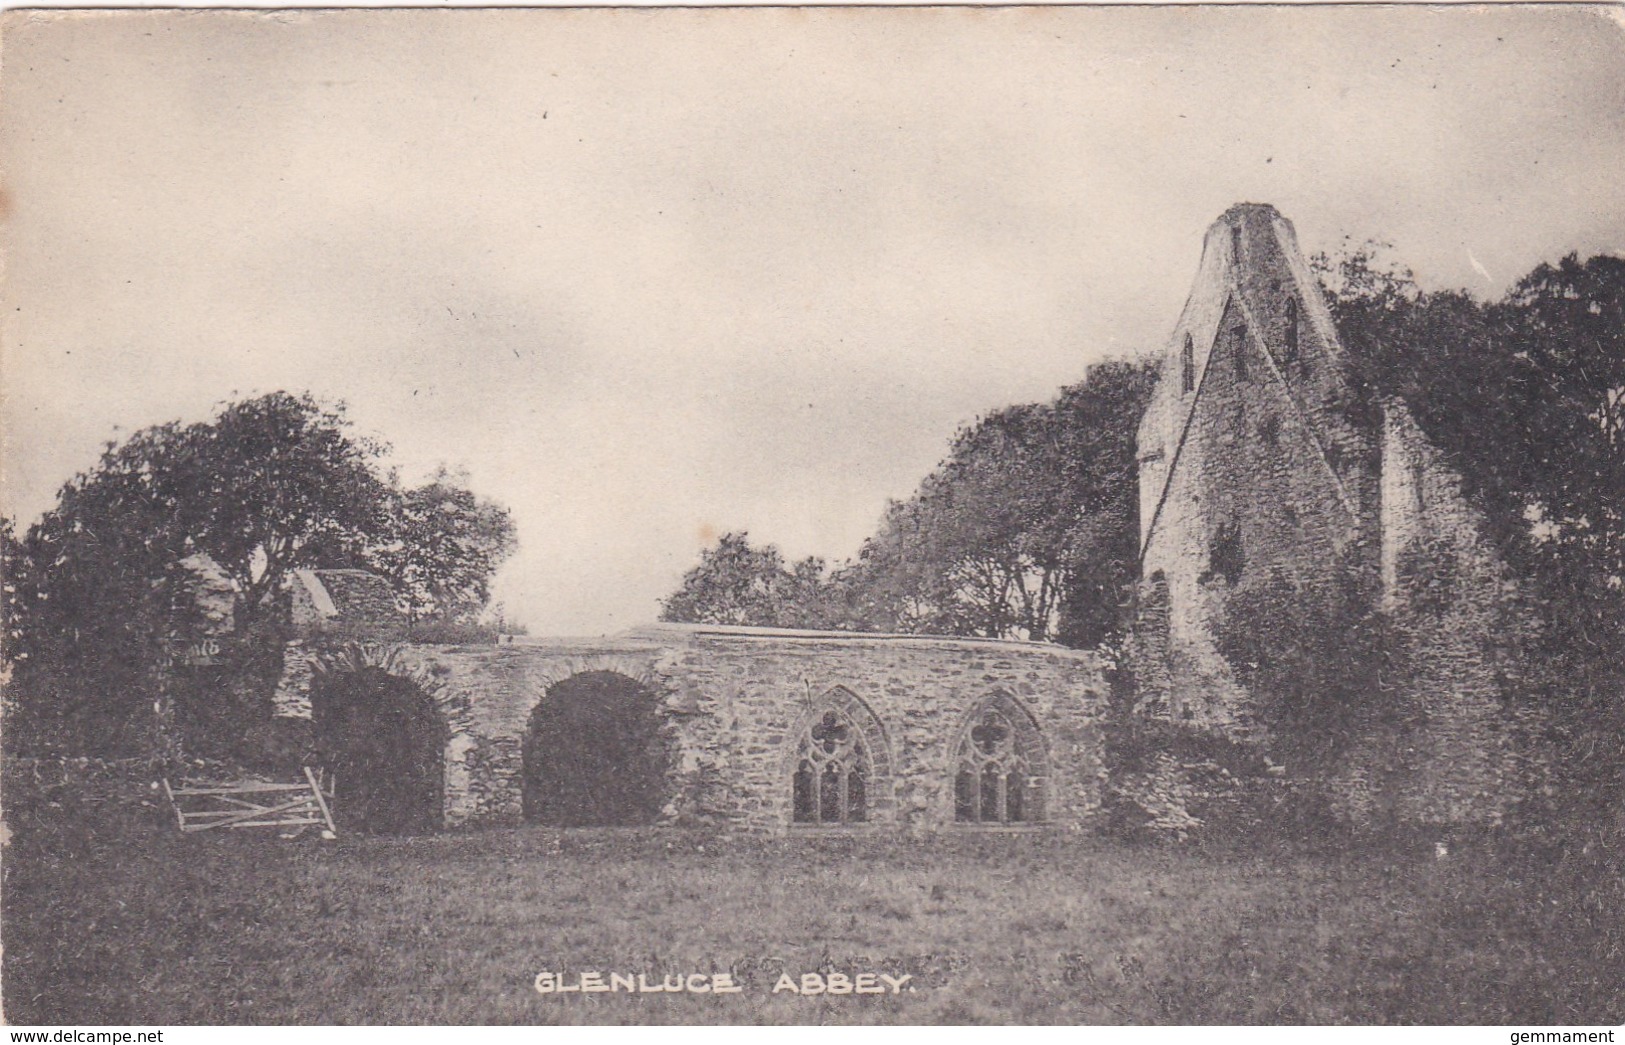 GLENLUCE ABBEY - Wigtownshire